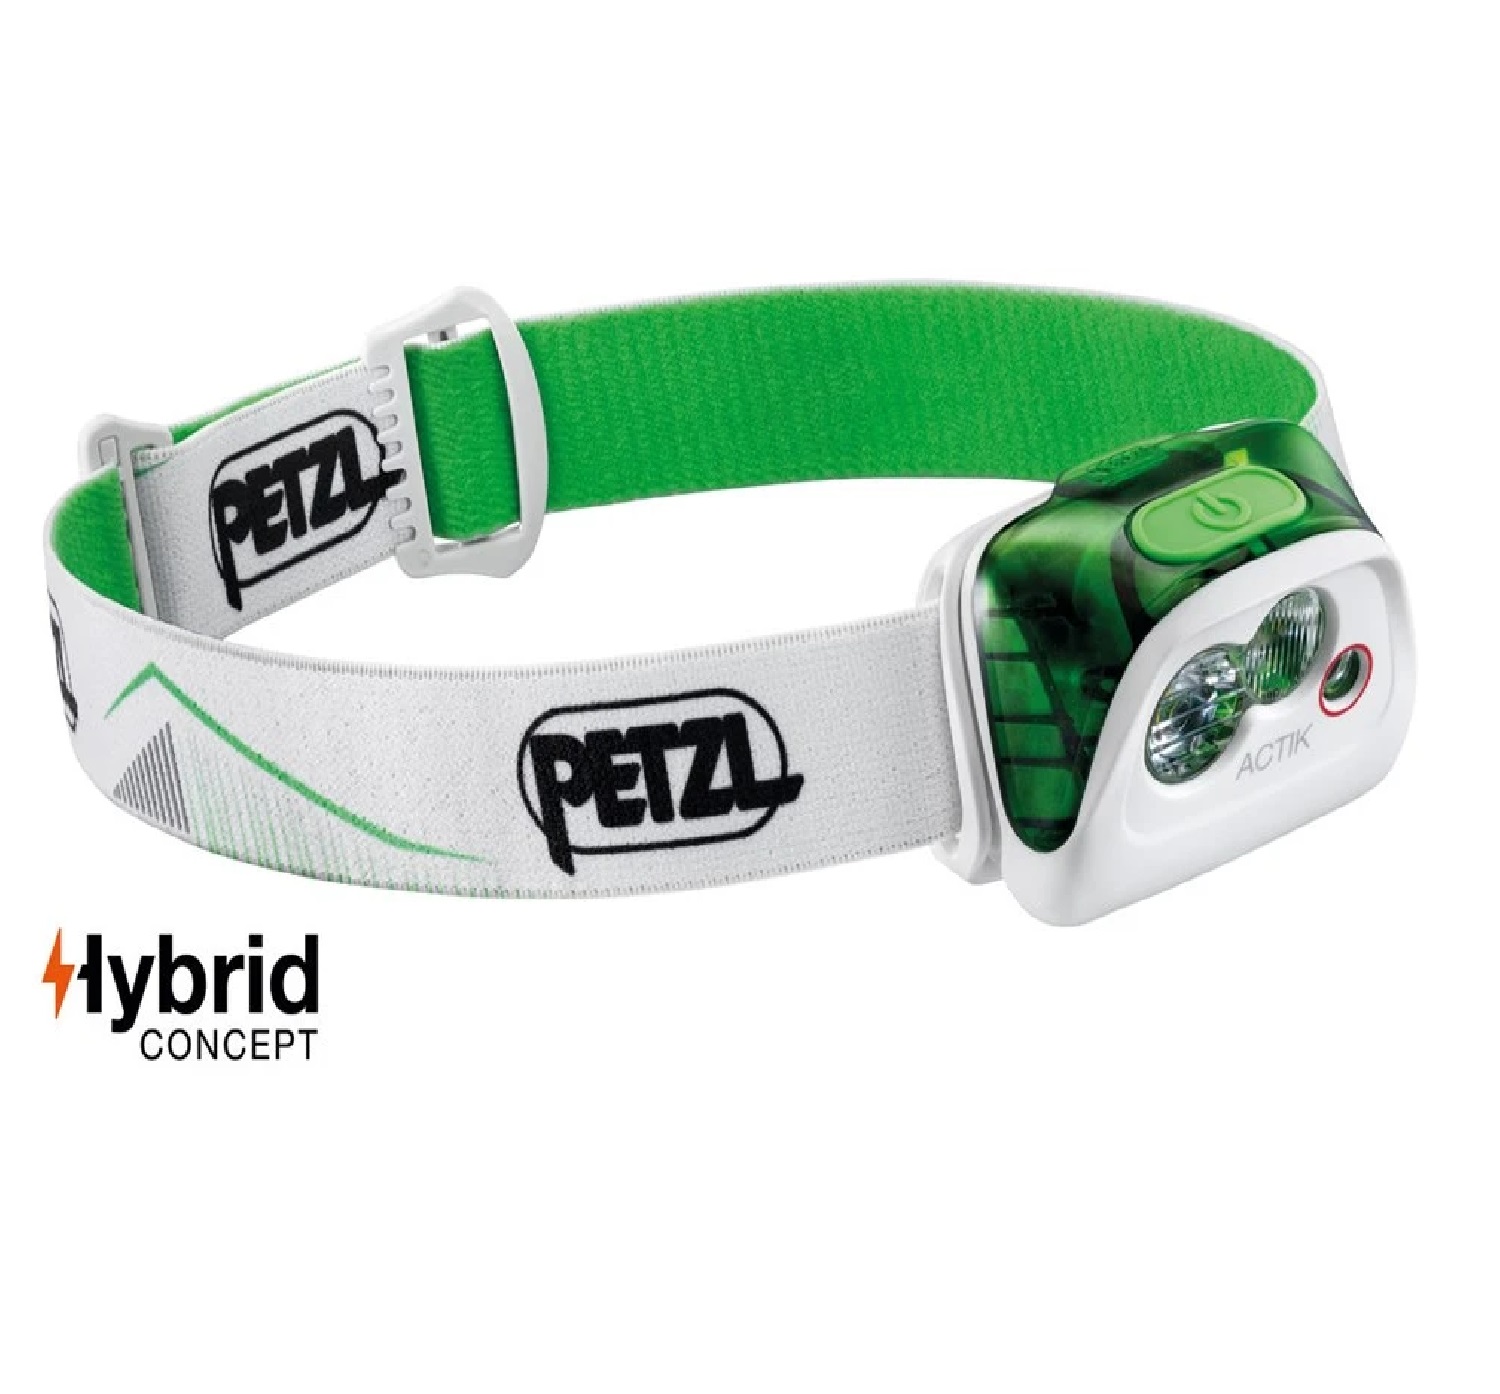 Petzl ACTIK Multi Beam Head Lamp With Red Lighting Green 350 LUMENS